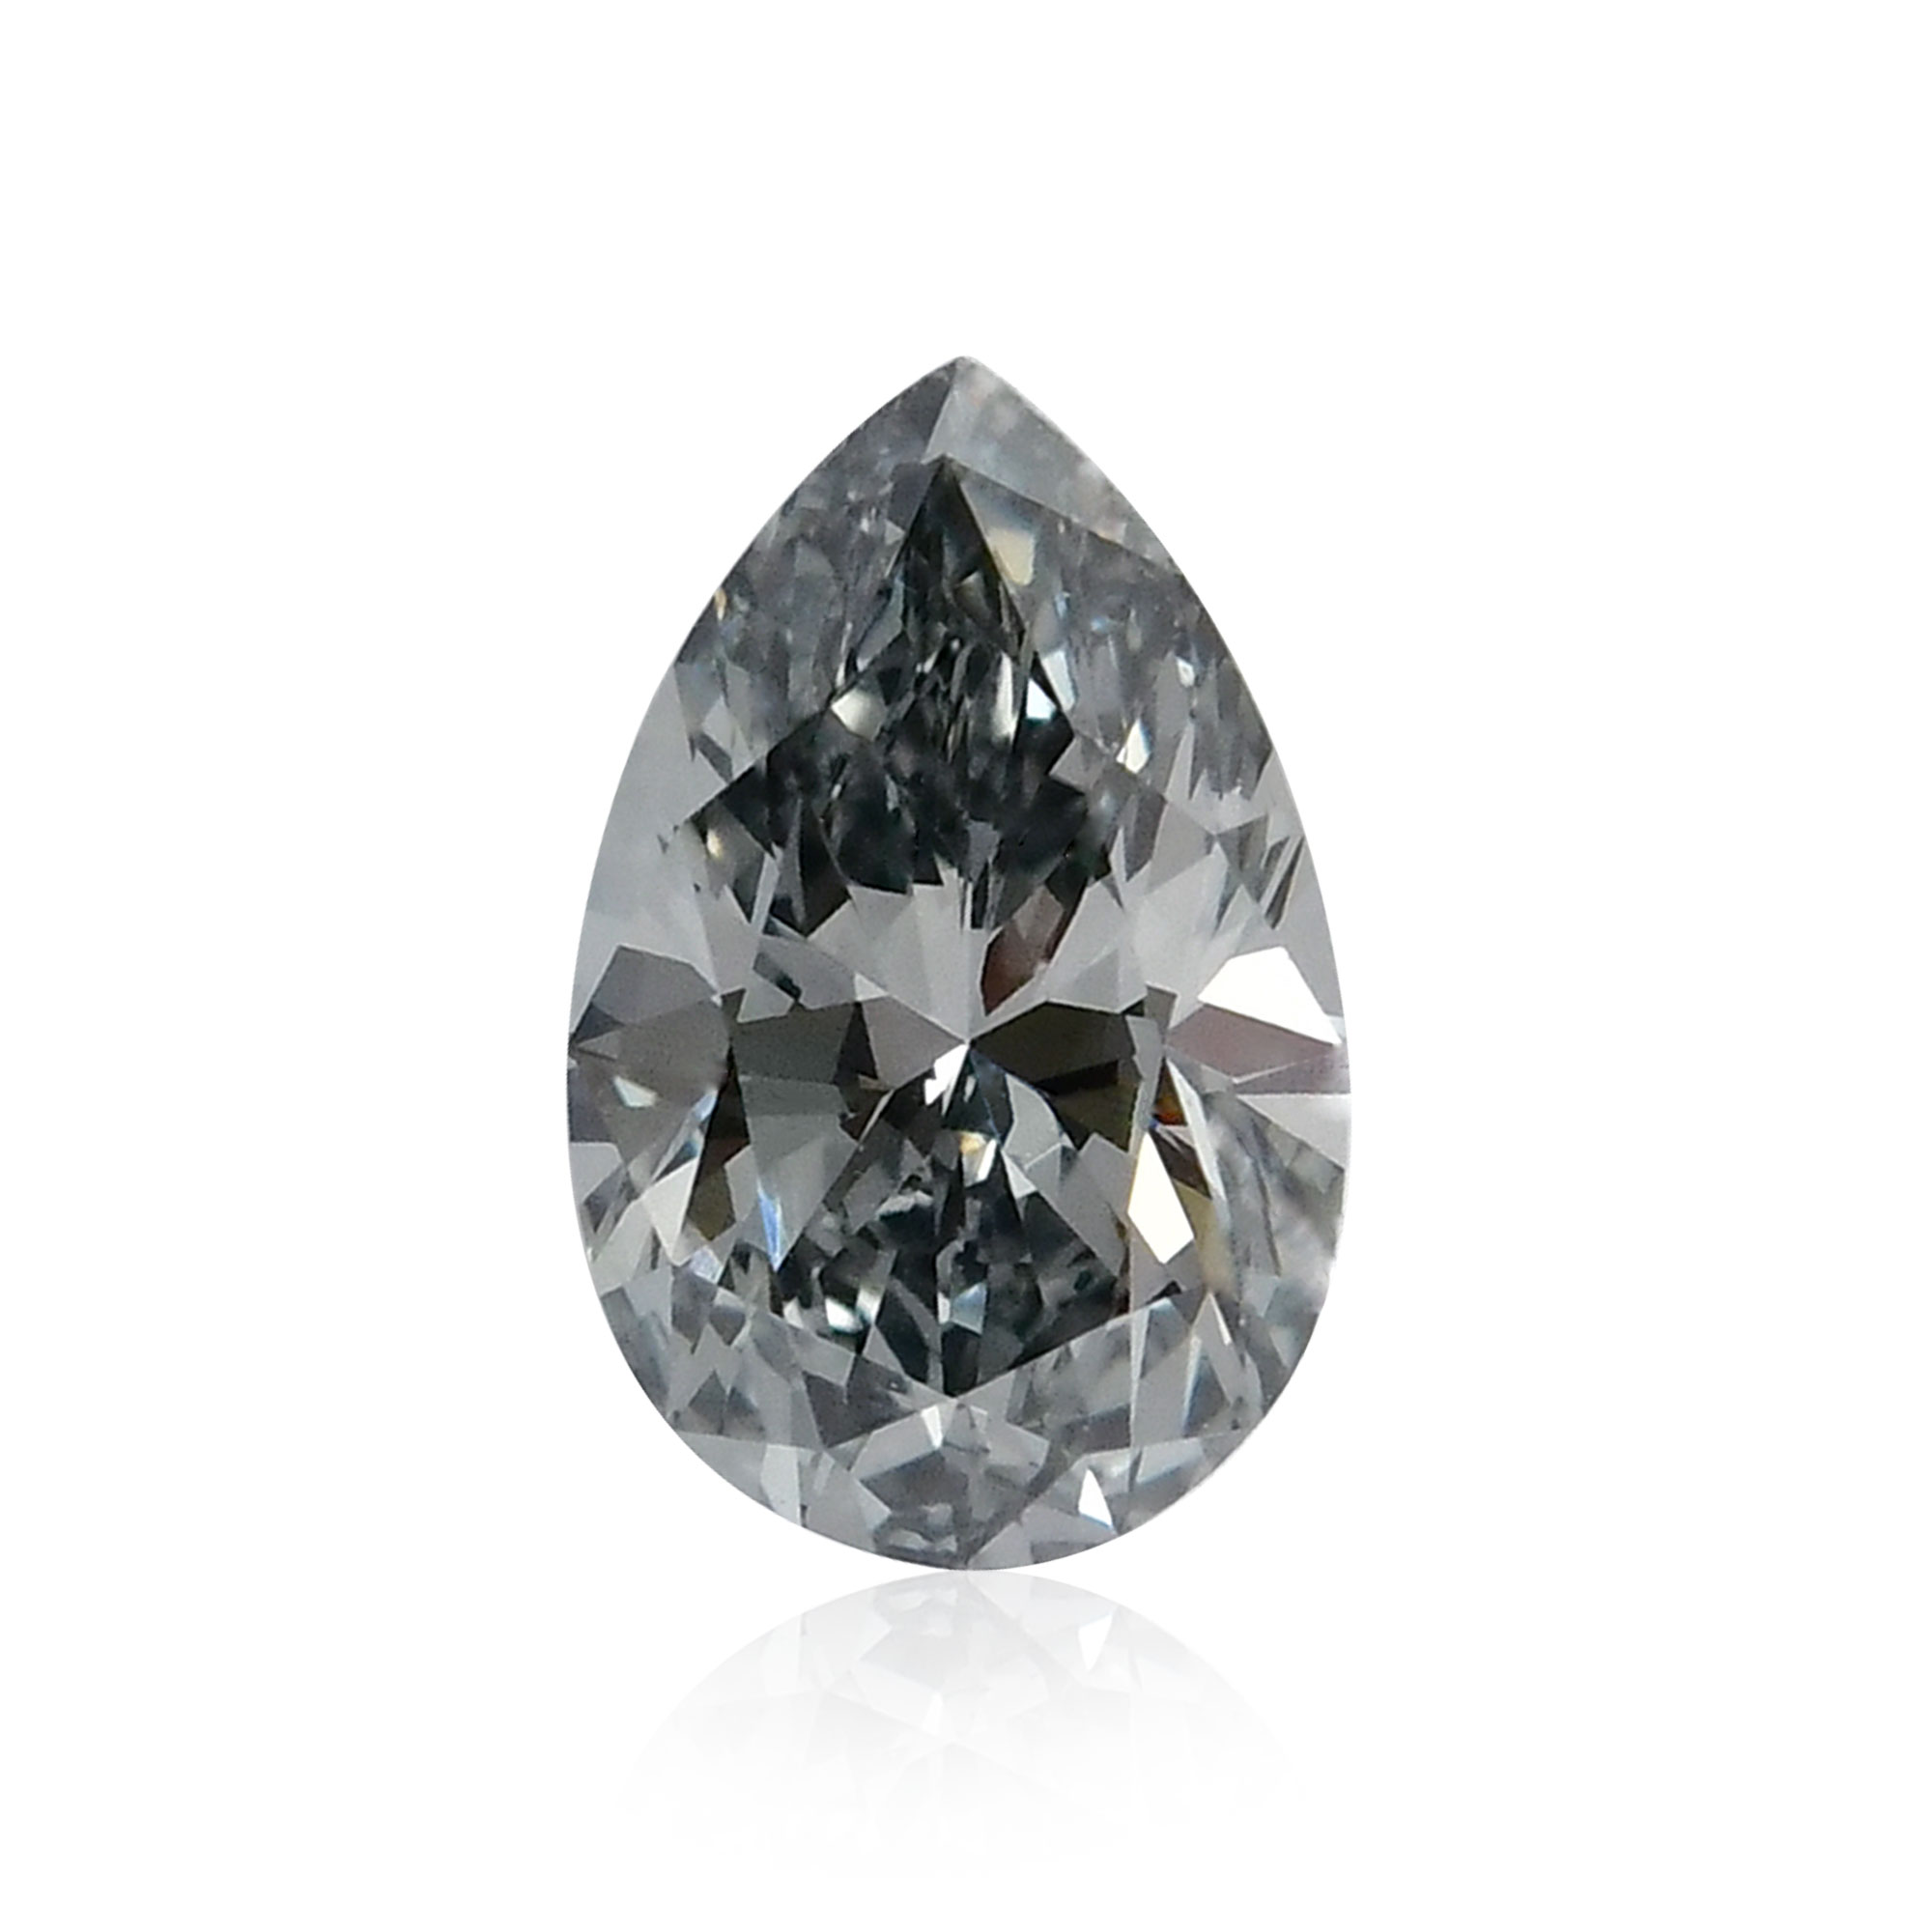 1.67 carat, Fancy Blue Gray Diamond, Pear Shape, IF Clarity, GIA, SKU 380262